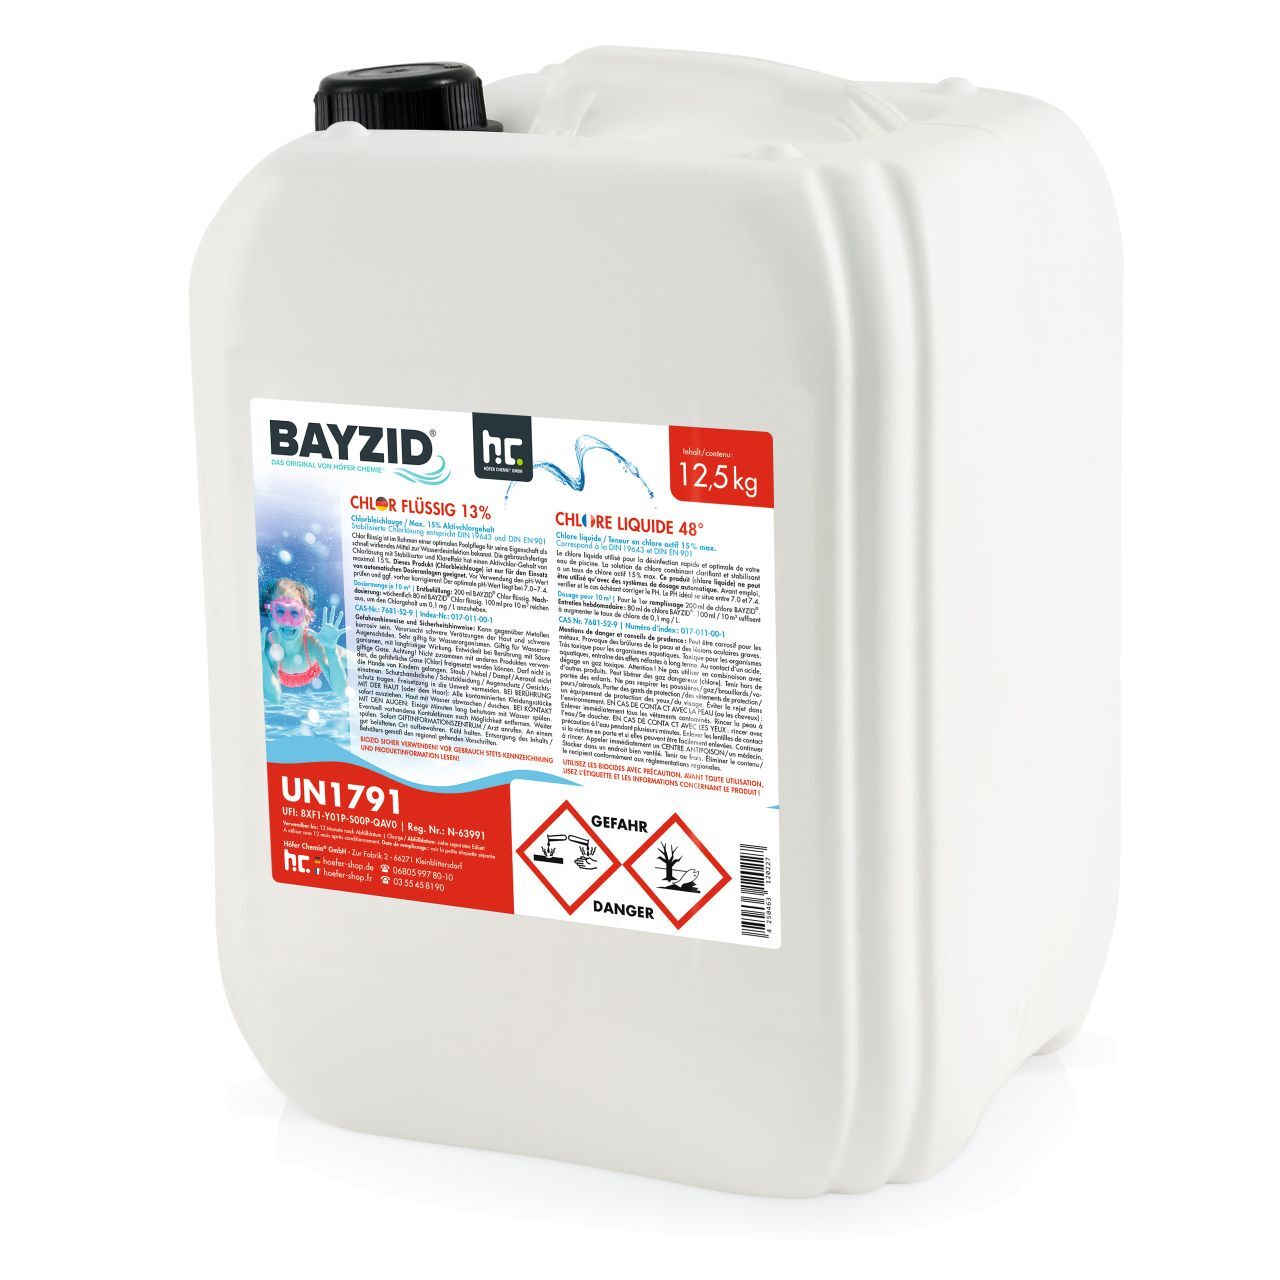 BAYZID 2,5 kg Bayzid® Chlore liquide 48° (1 x 12.5 kg)